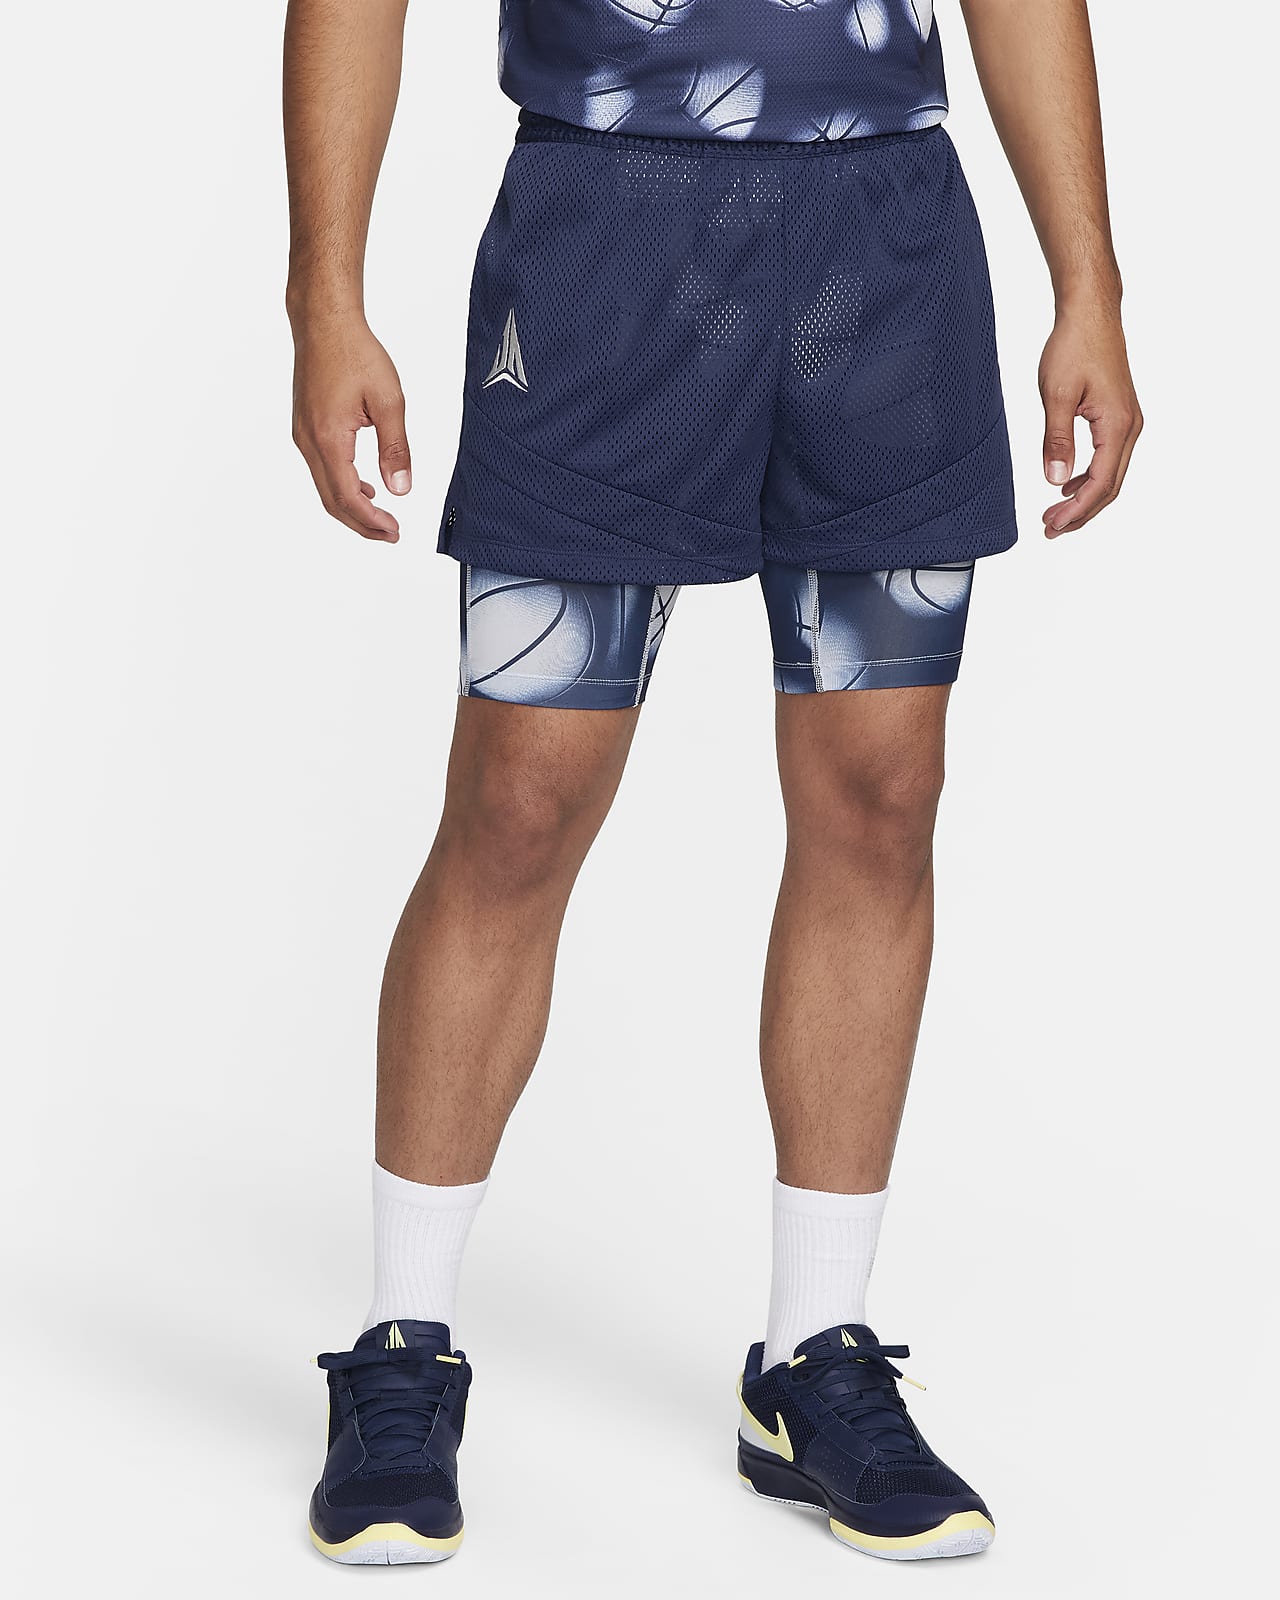 Wholesale nba basketball shorts For Comfortable Sportswear 